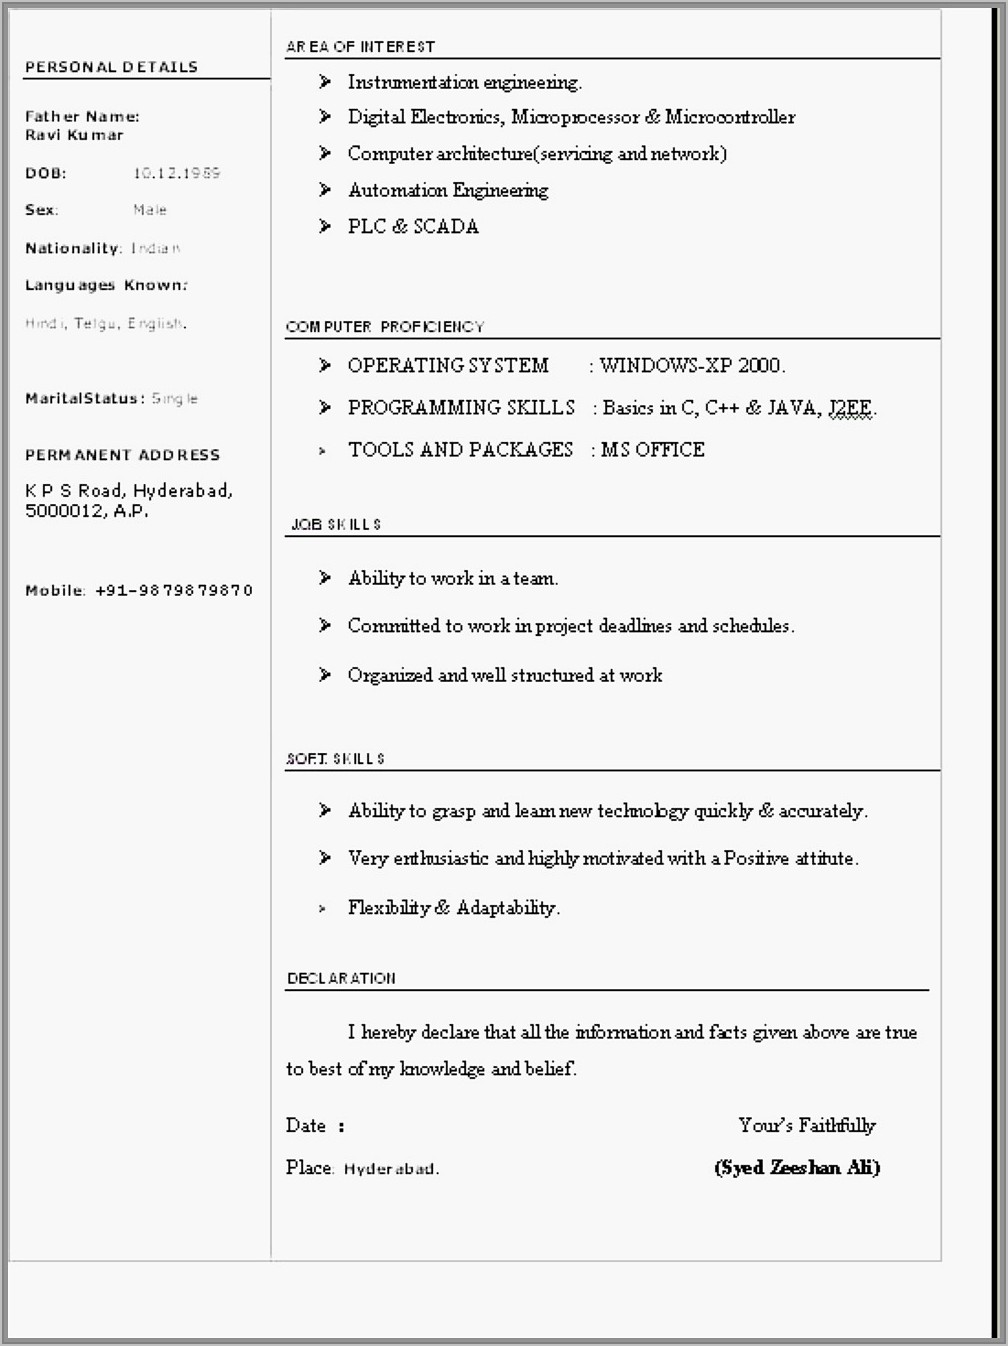 Resume Format Microsoft Office Word 2007